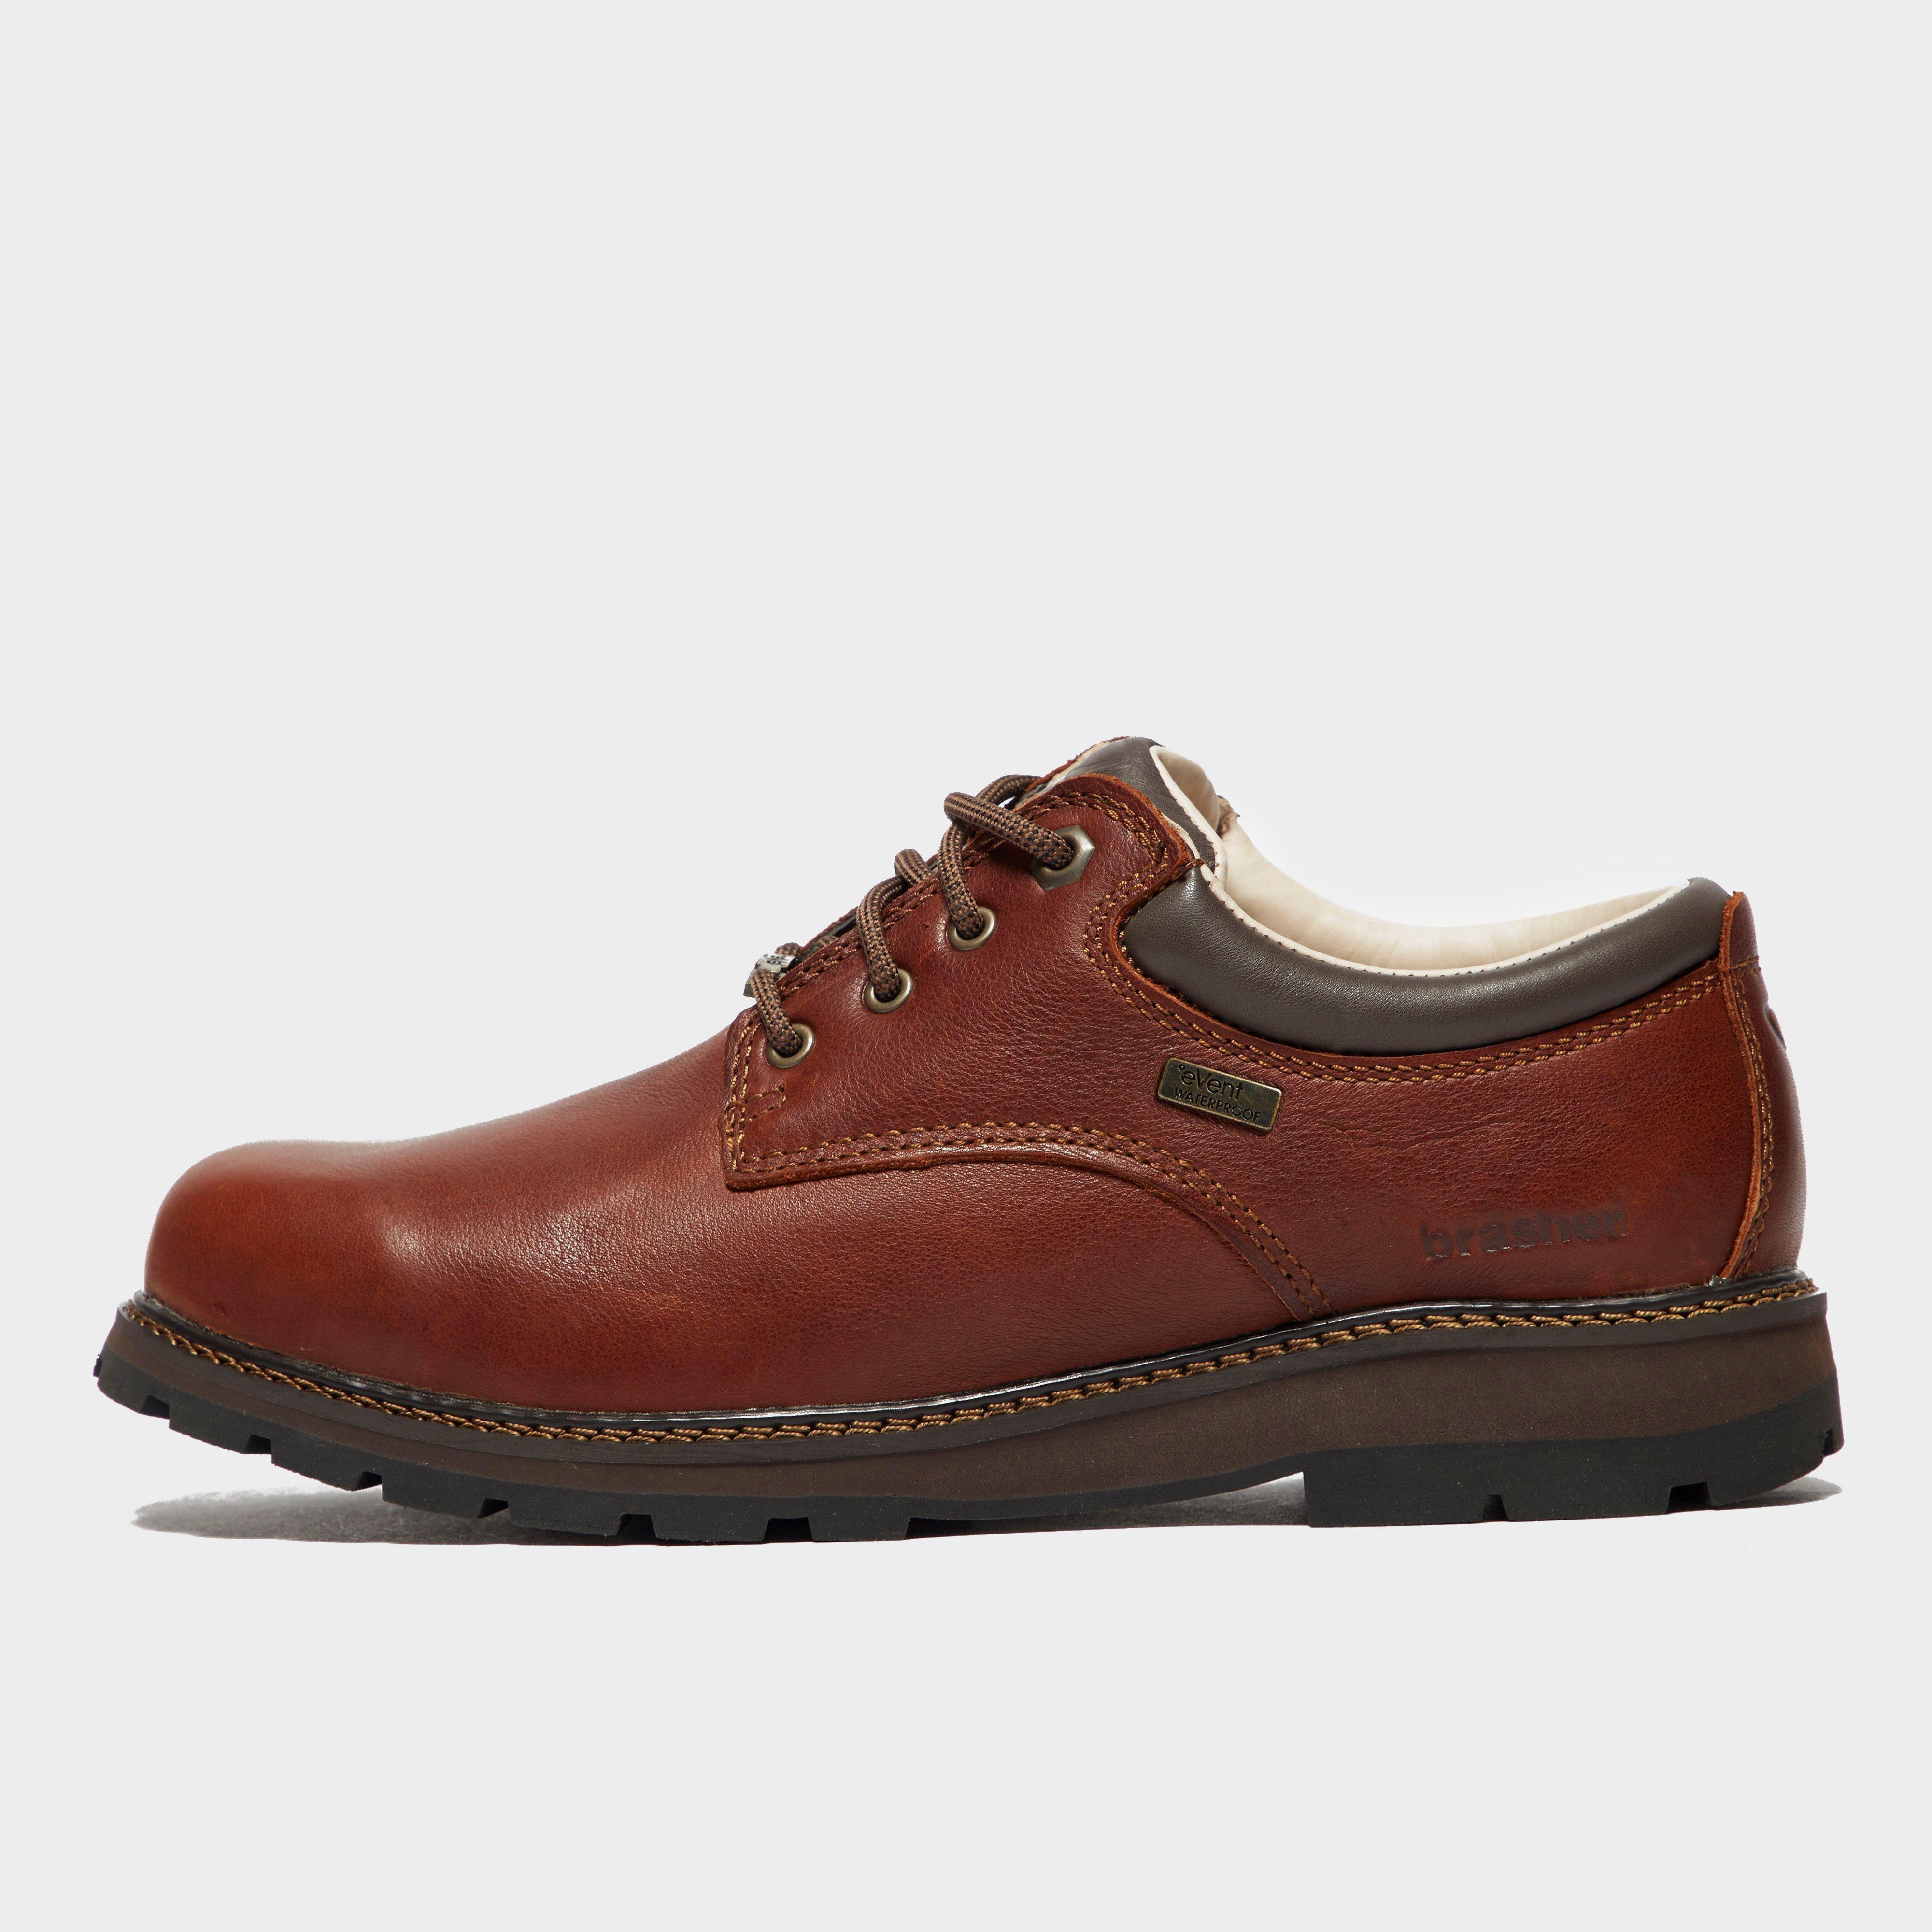 Brasher Mens Country Classic Walking Shoes - Brown/brn  Brown/brn